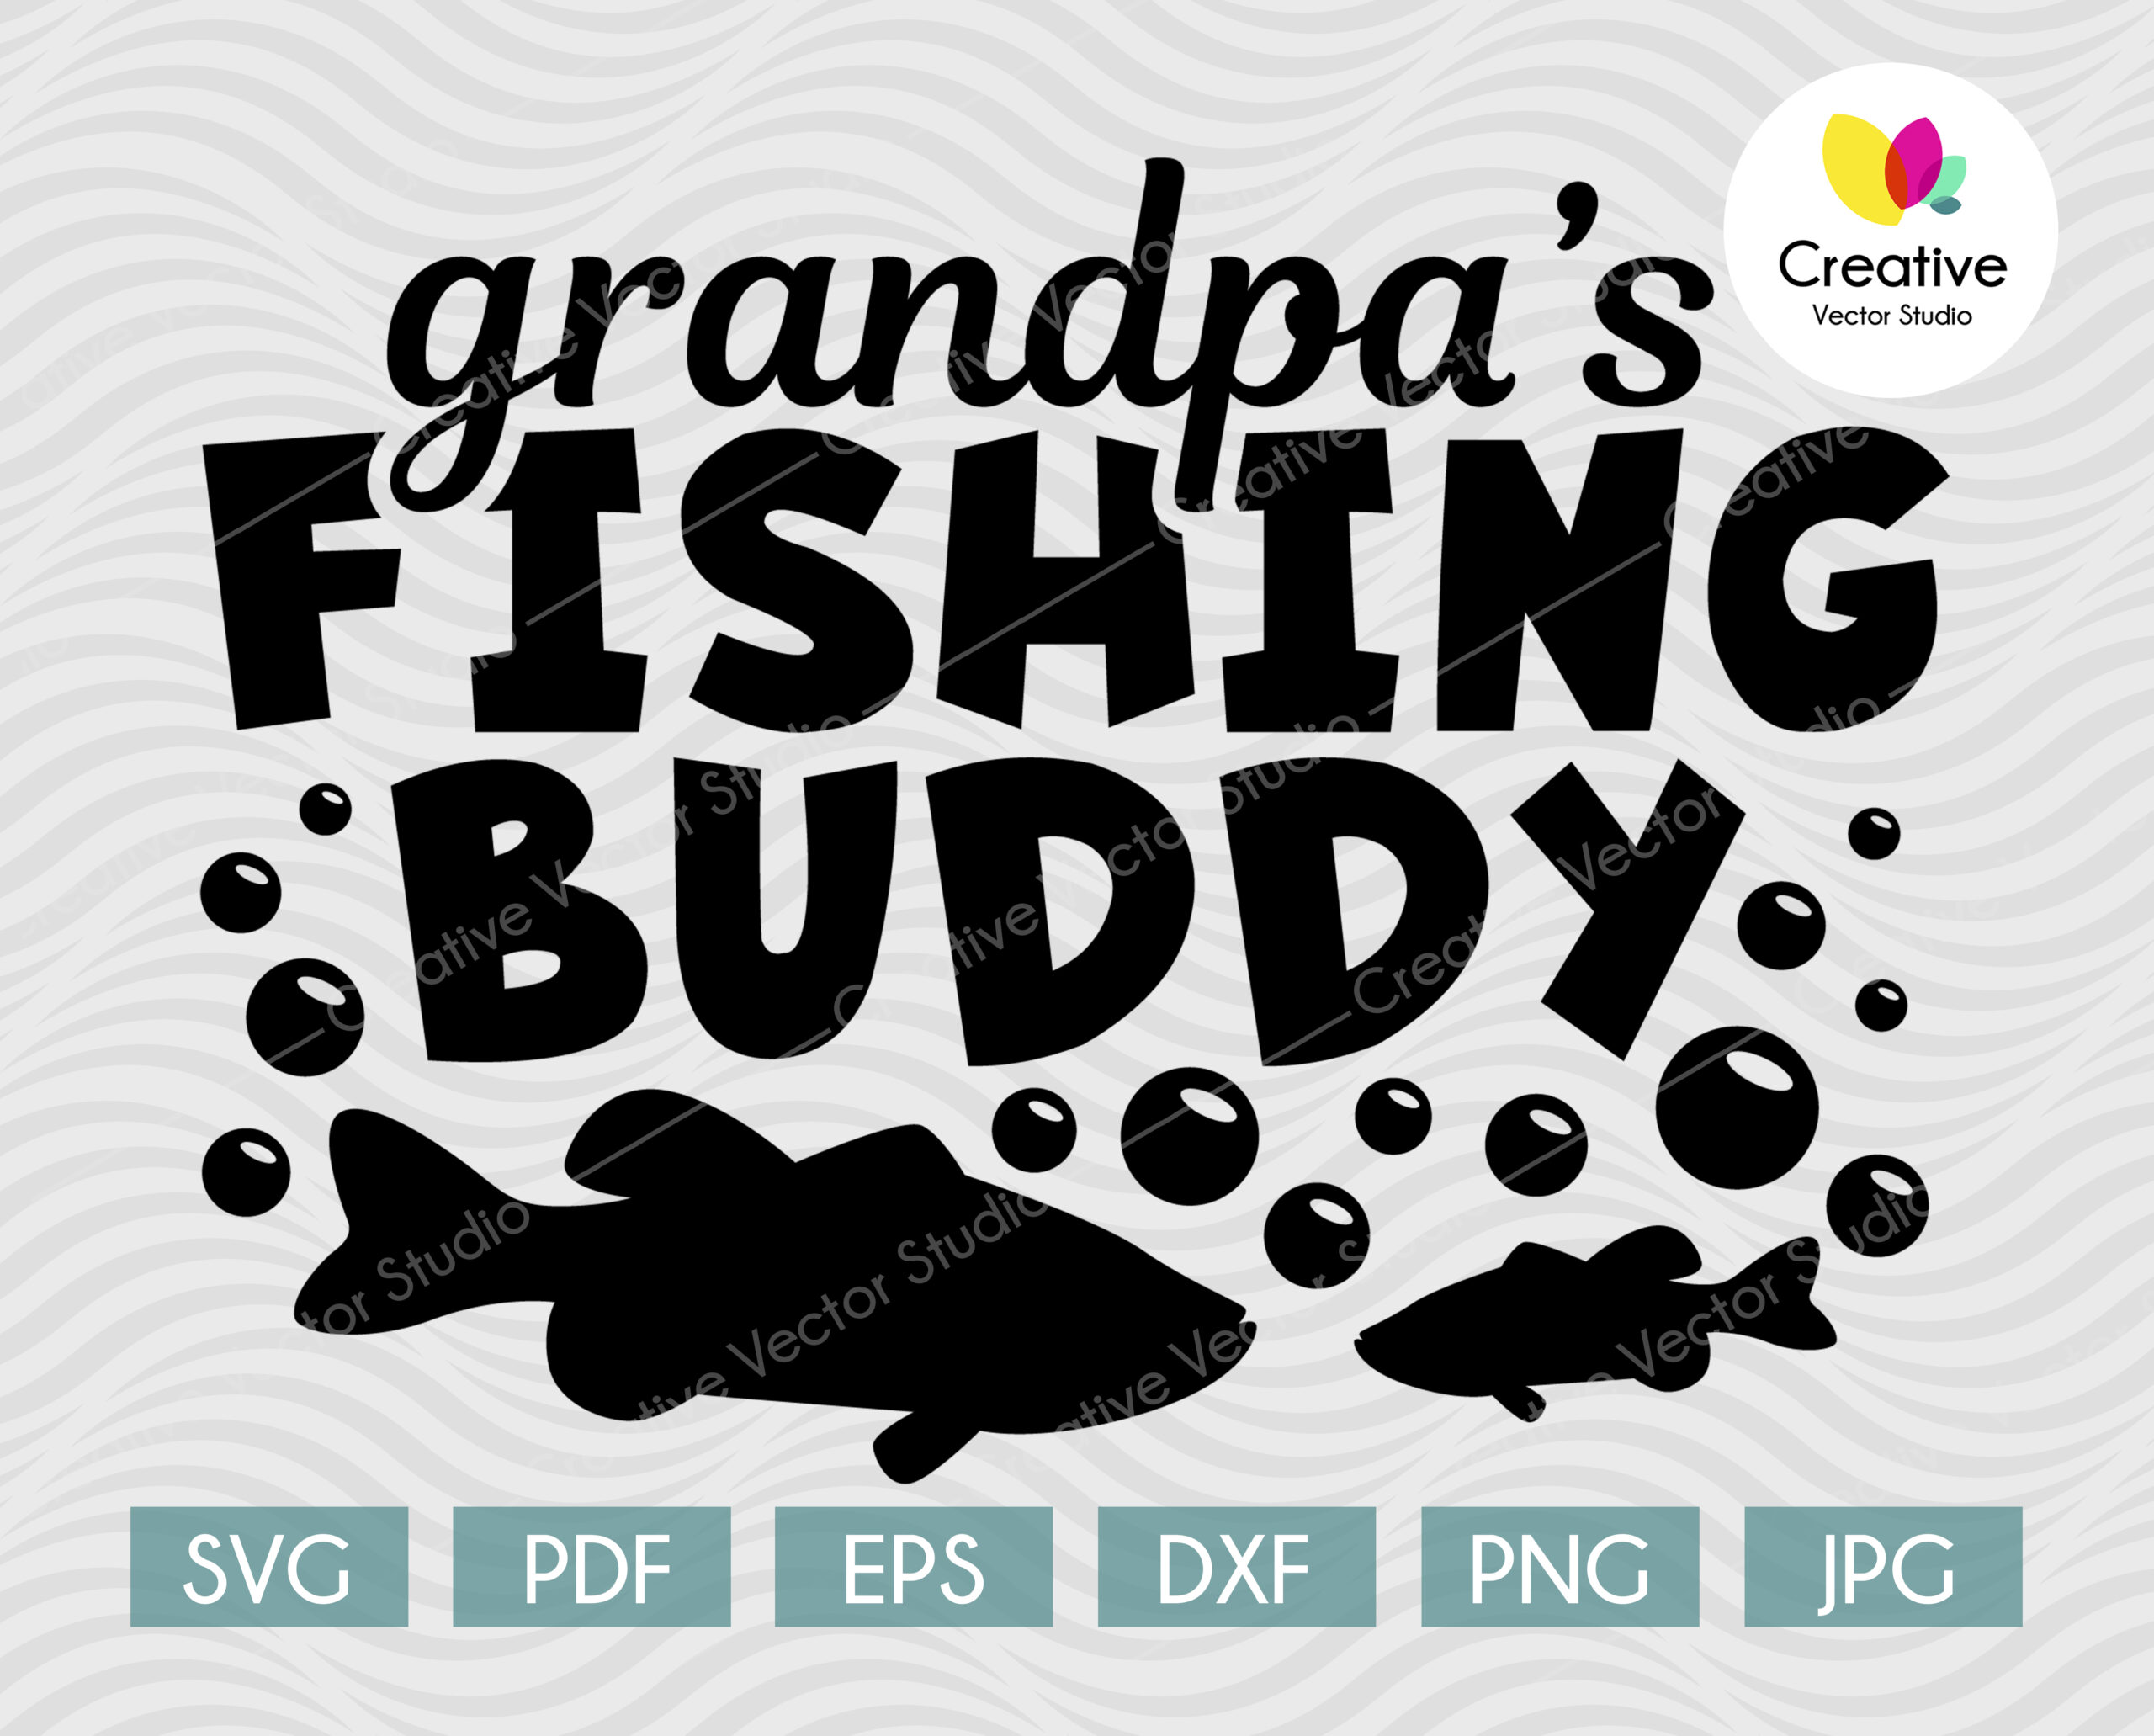 Download Grandpa S Fishing Buddy Svg Creative Vector Studio